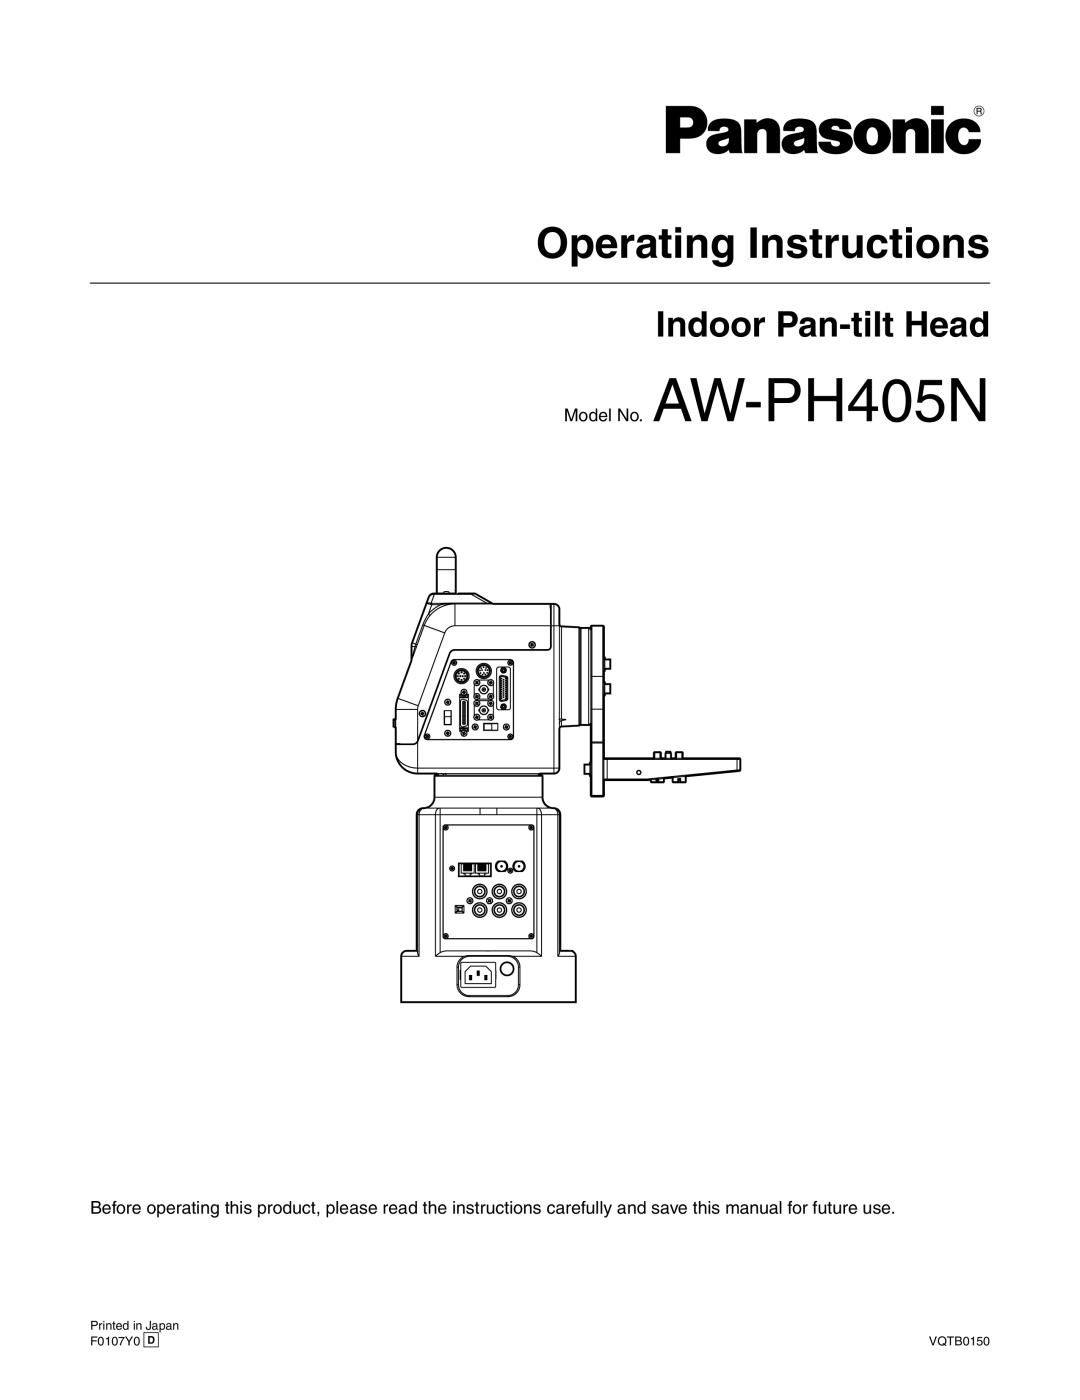 Panasonic manual Operating Instructions, Indoor Pan-tiltHead, Model No. AW-PH405N 